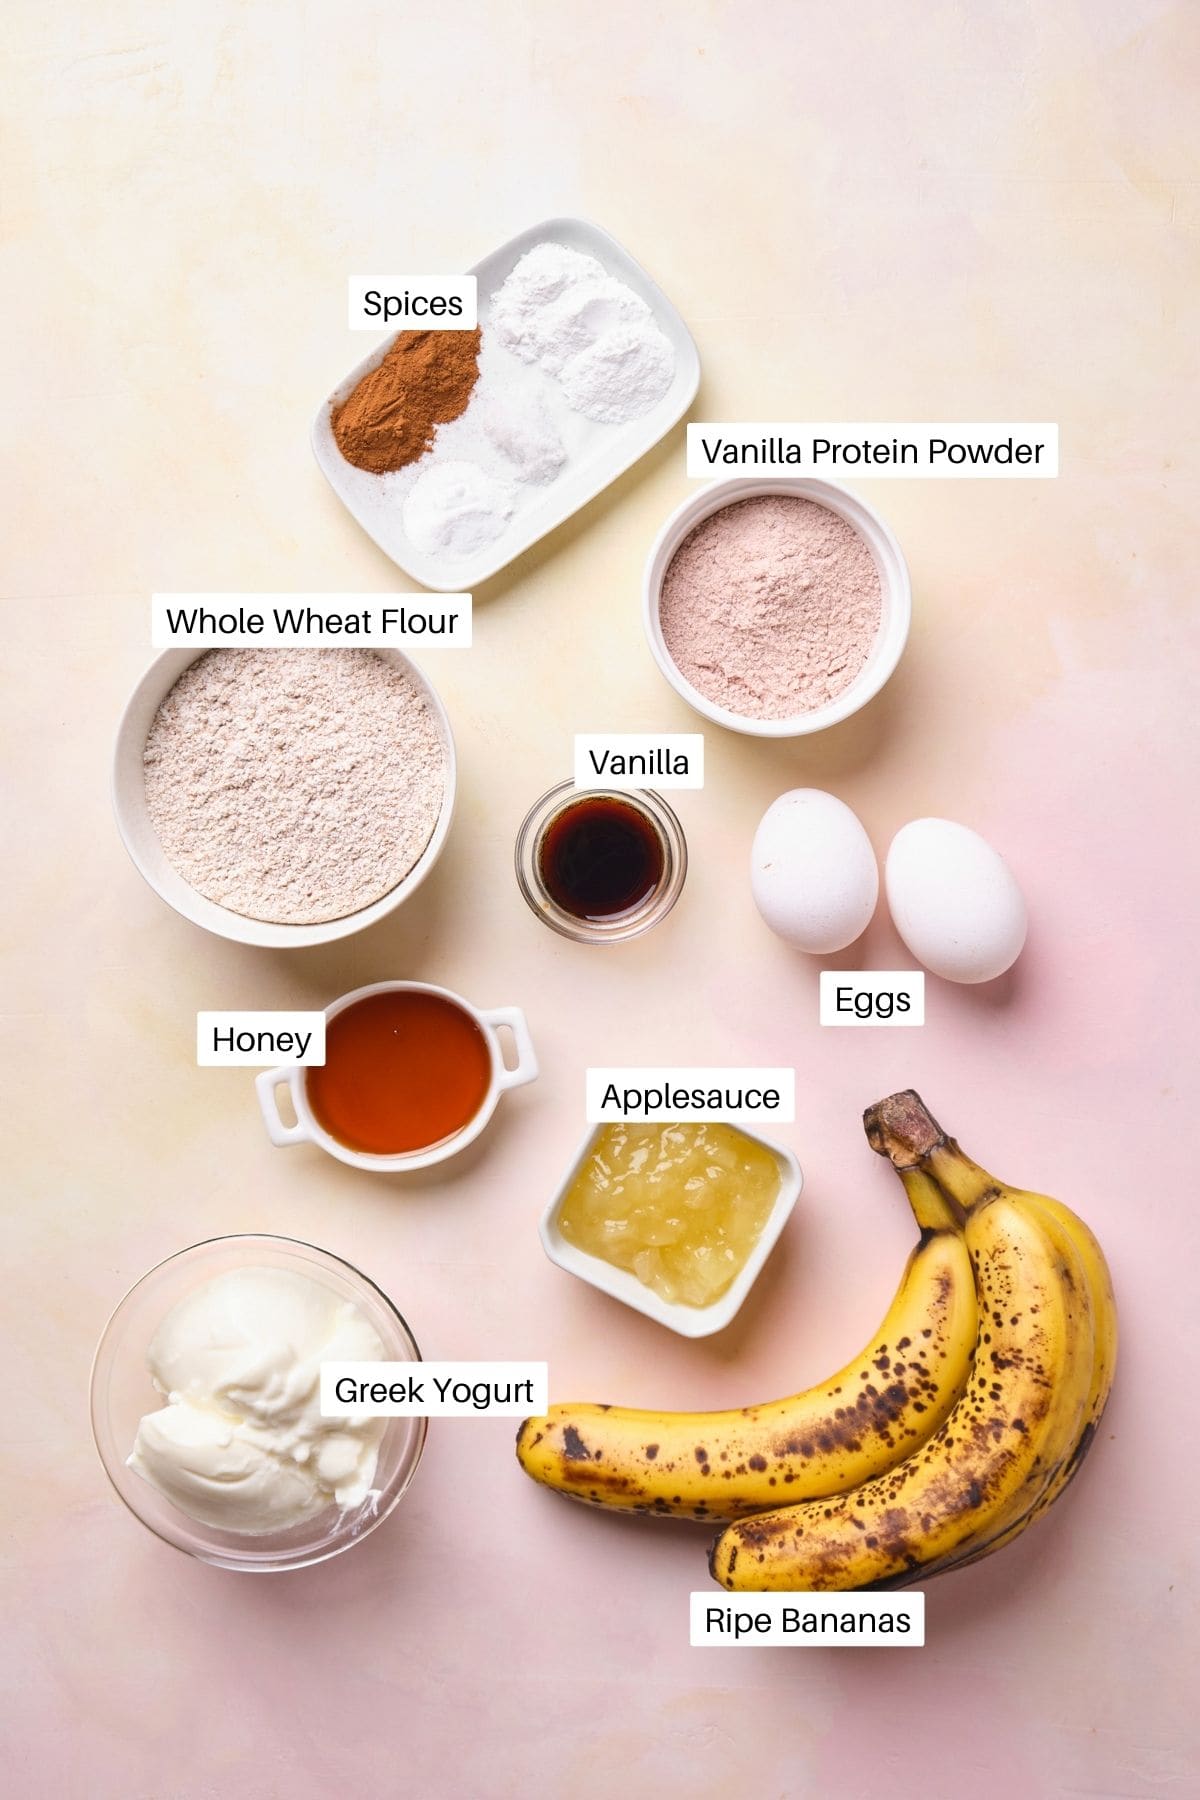 Ingredients for protein banana bread, including applesauce, Greek yogurt, and vanilla protein powder.